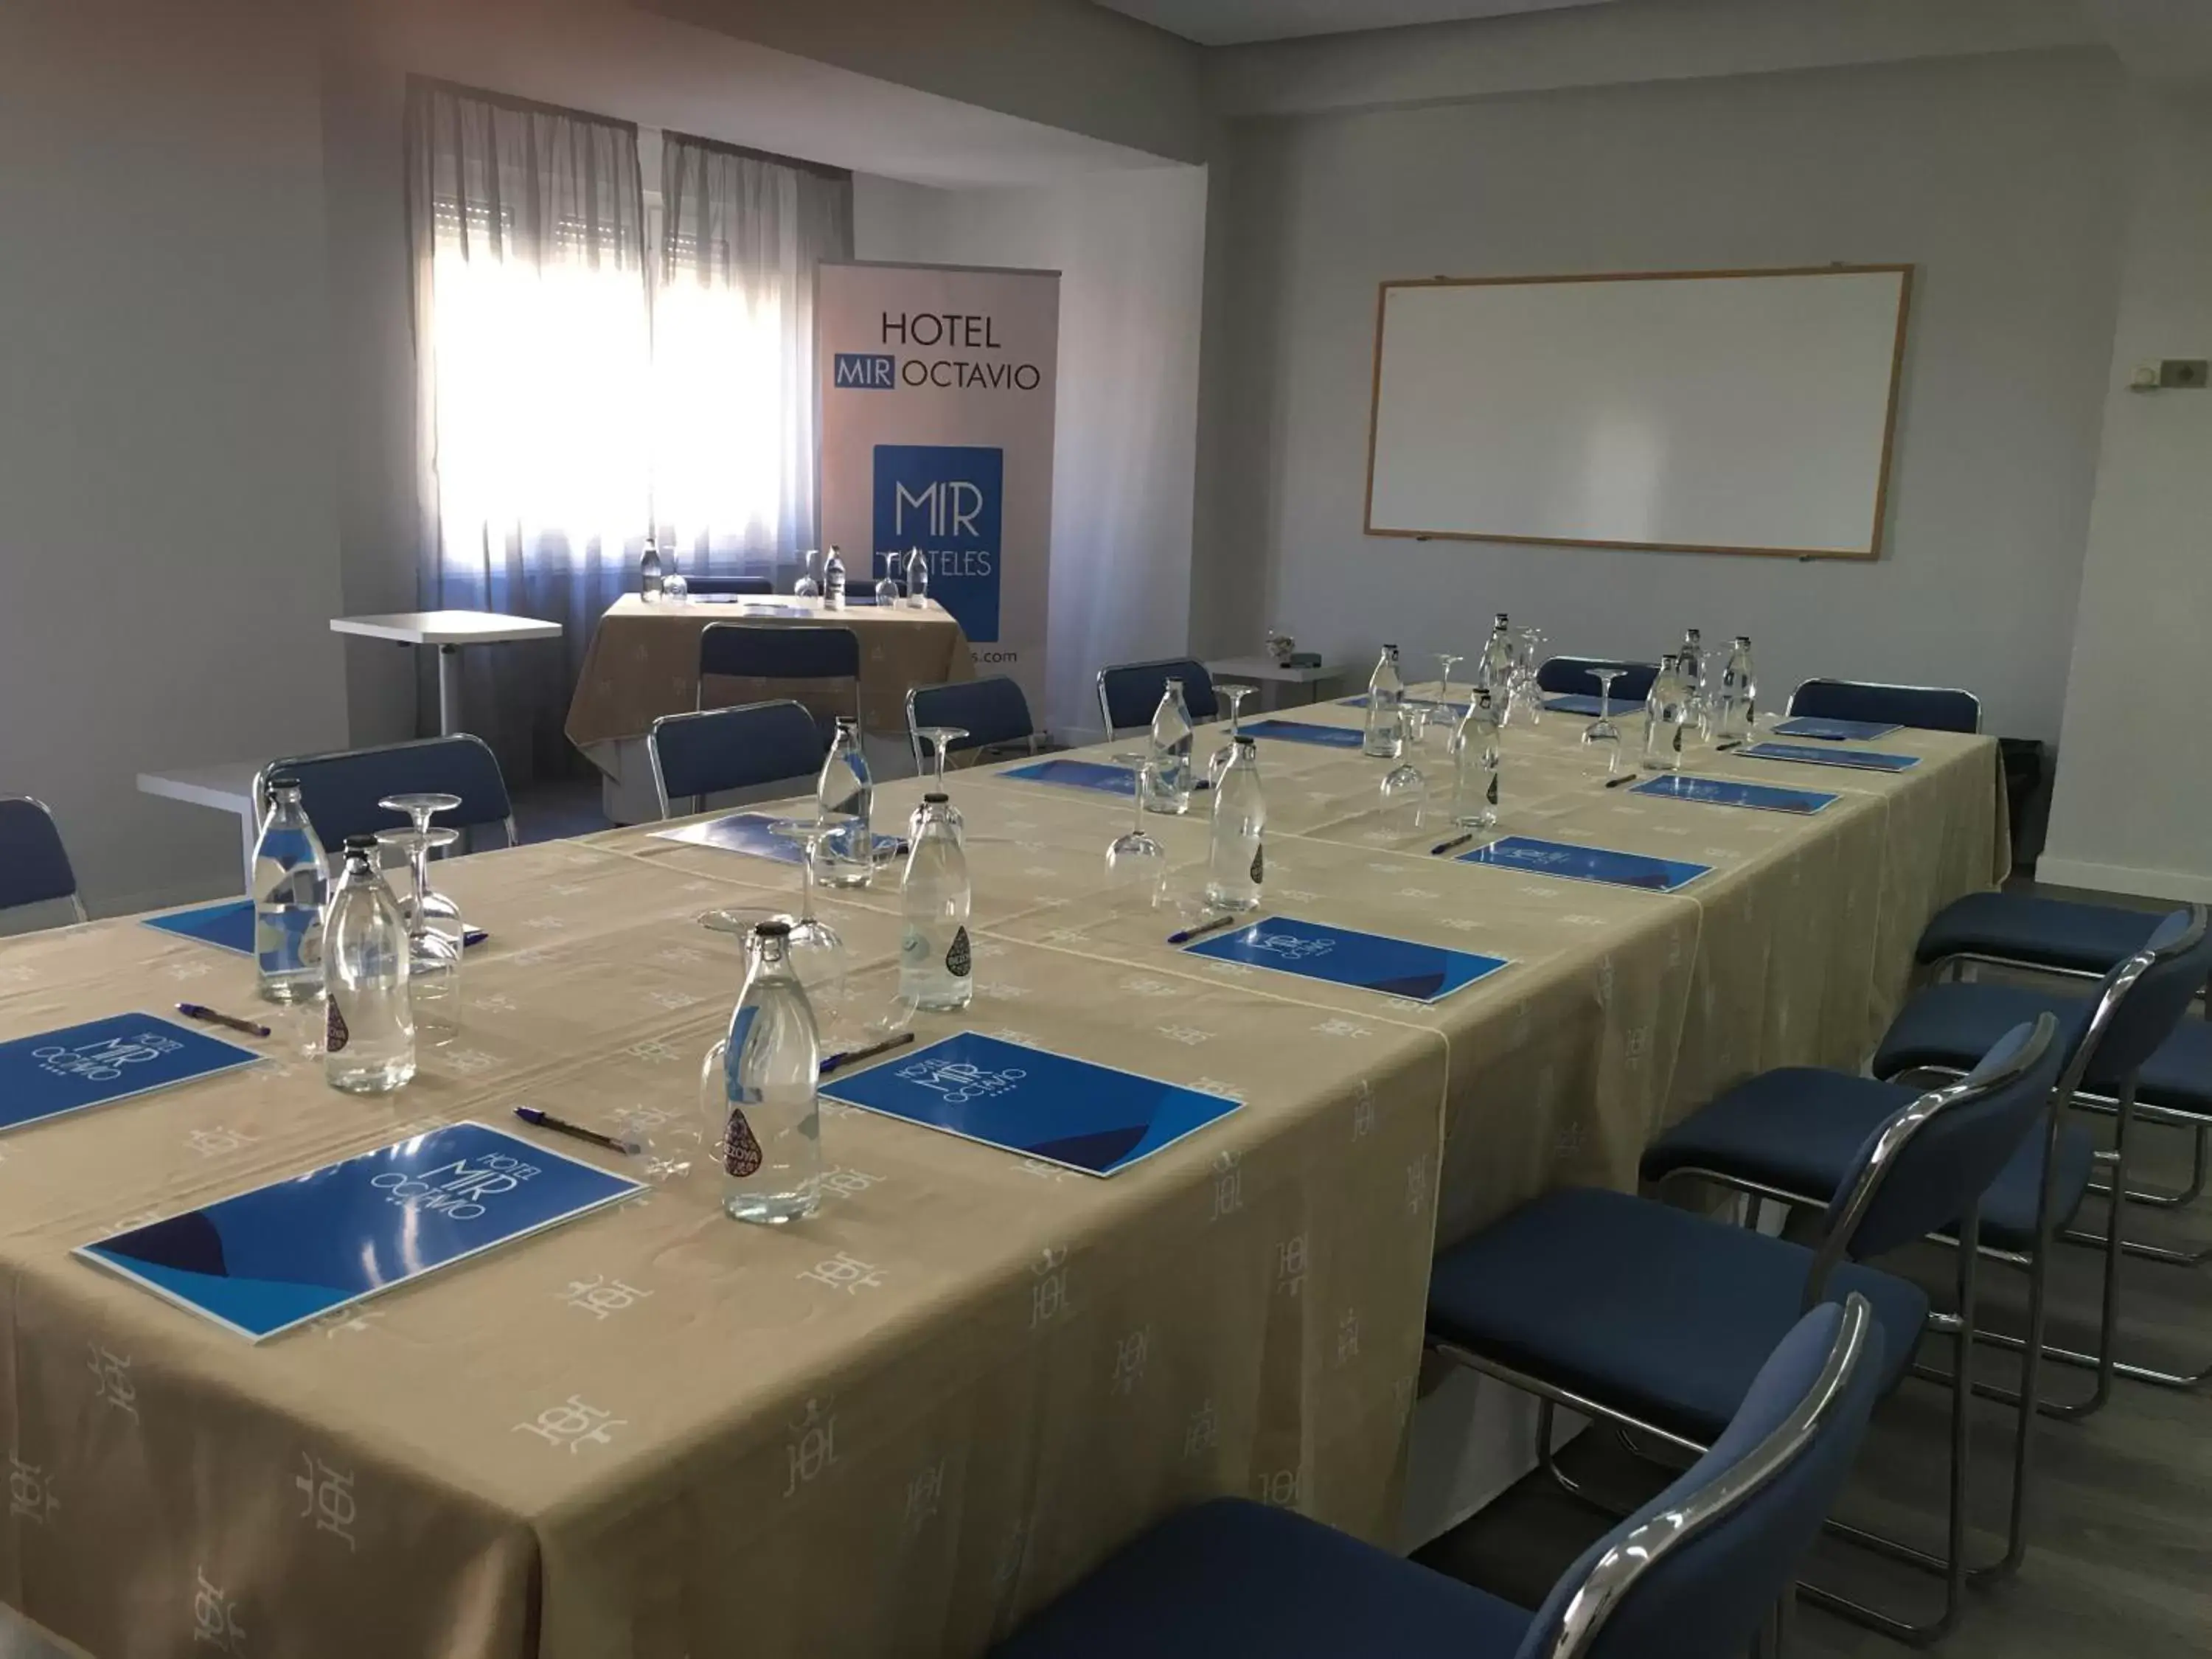 Meeting/conference room in Mir Octavio